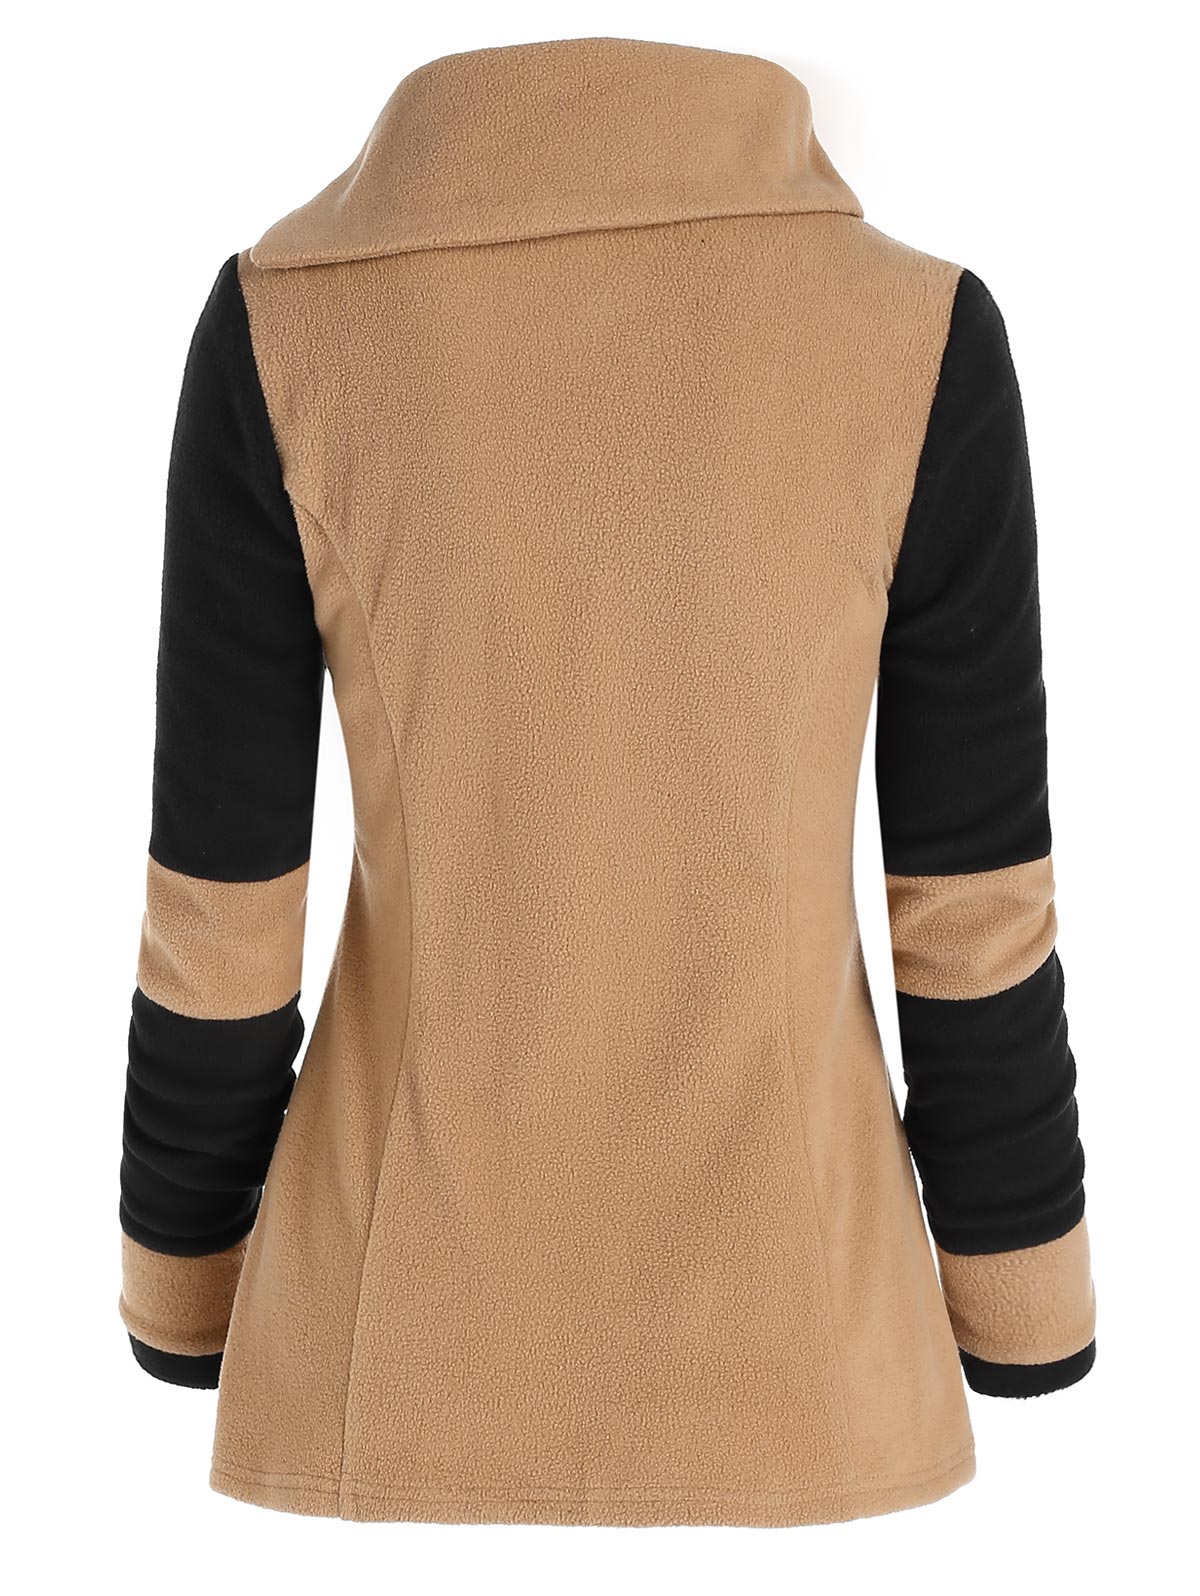 come4buy.com-Fleece Jacket Full Sleeve Warm Coat